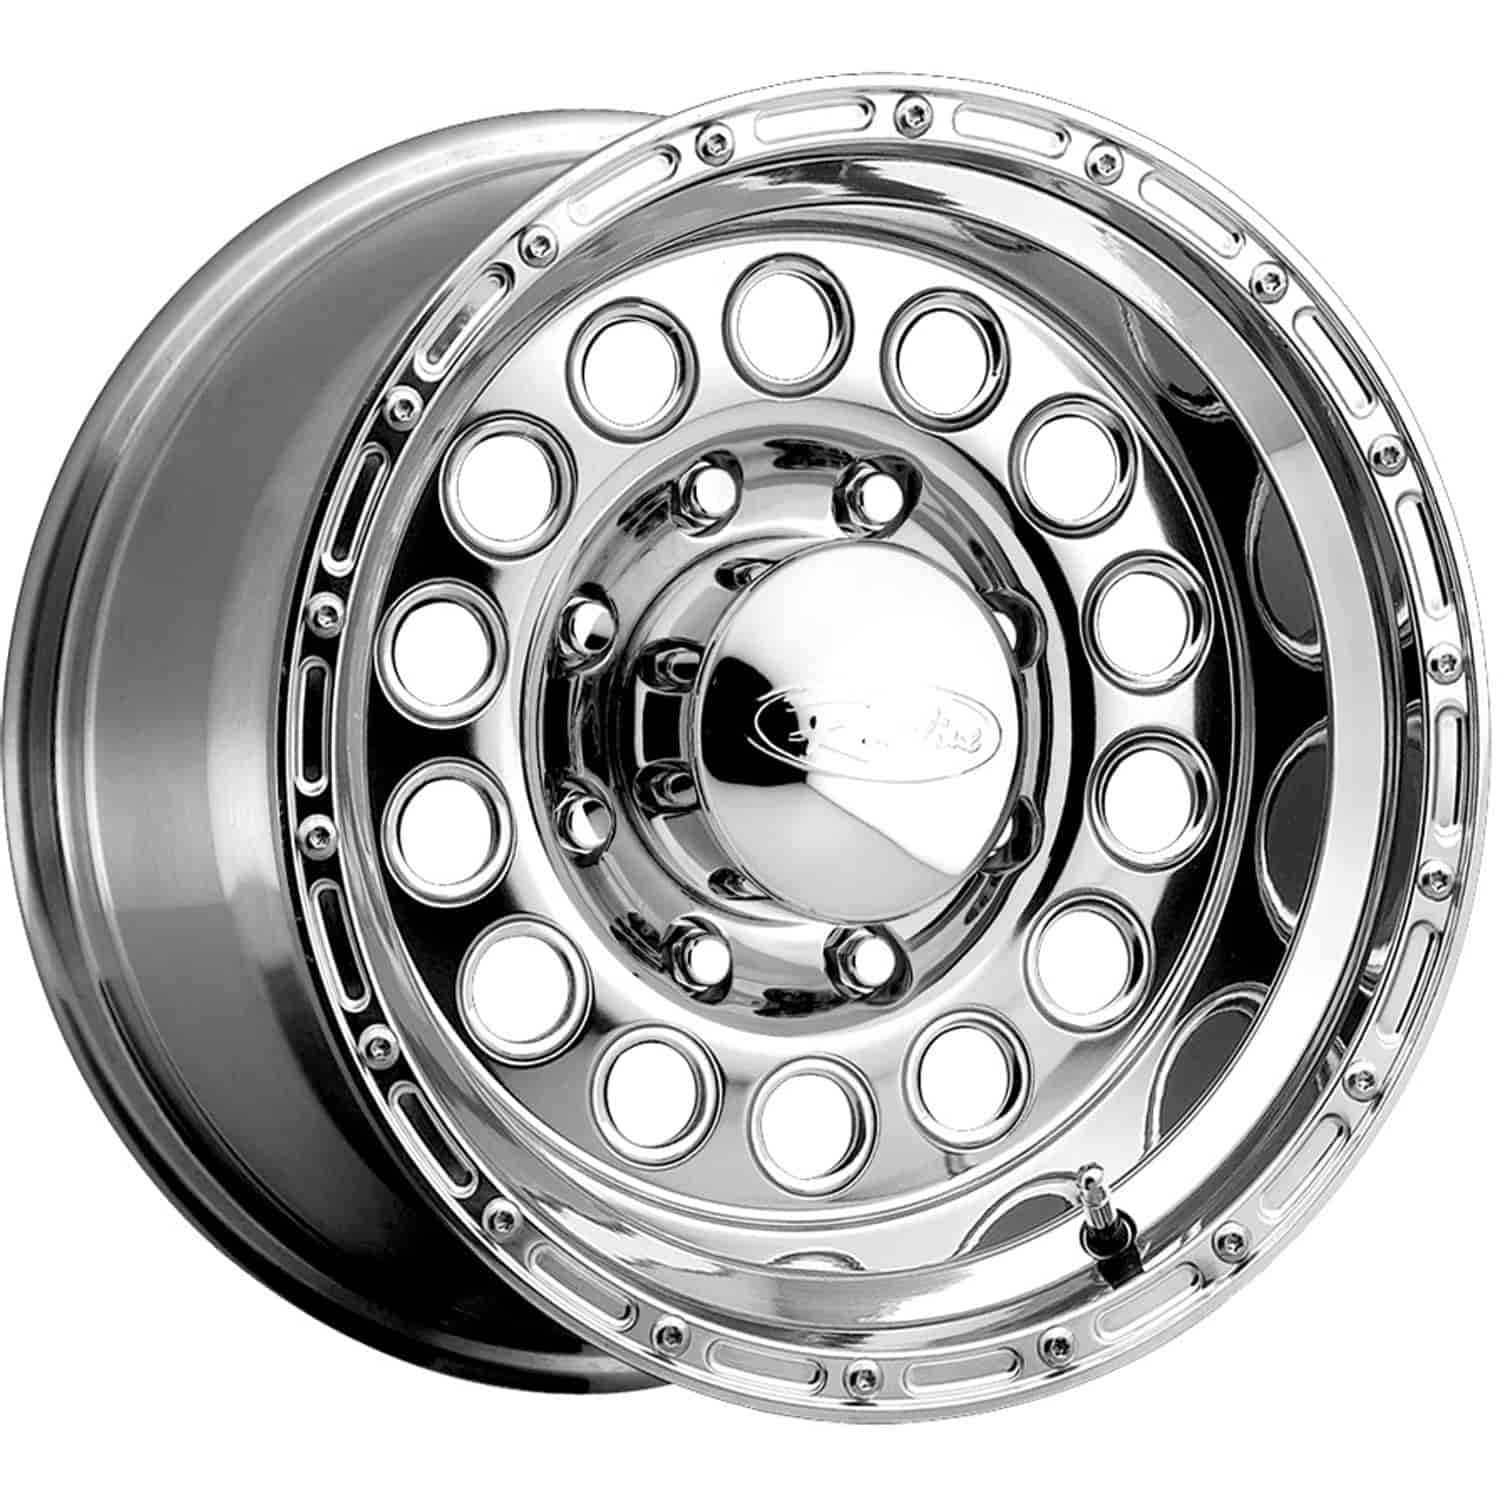 887 Spike Wheel Size: 17 X 9" Bolt Pattern: 6X139.7 mm [Polished]